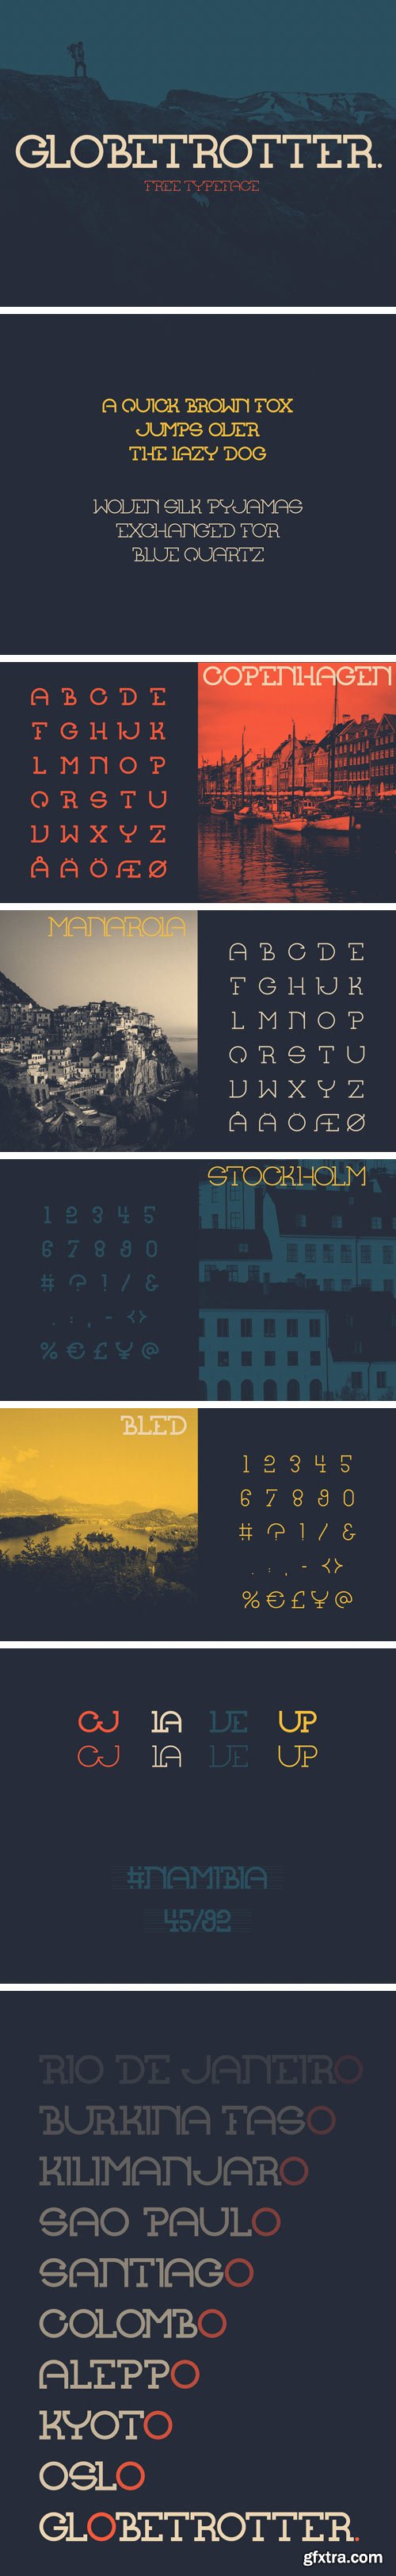 Globetrotter Display Typeface